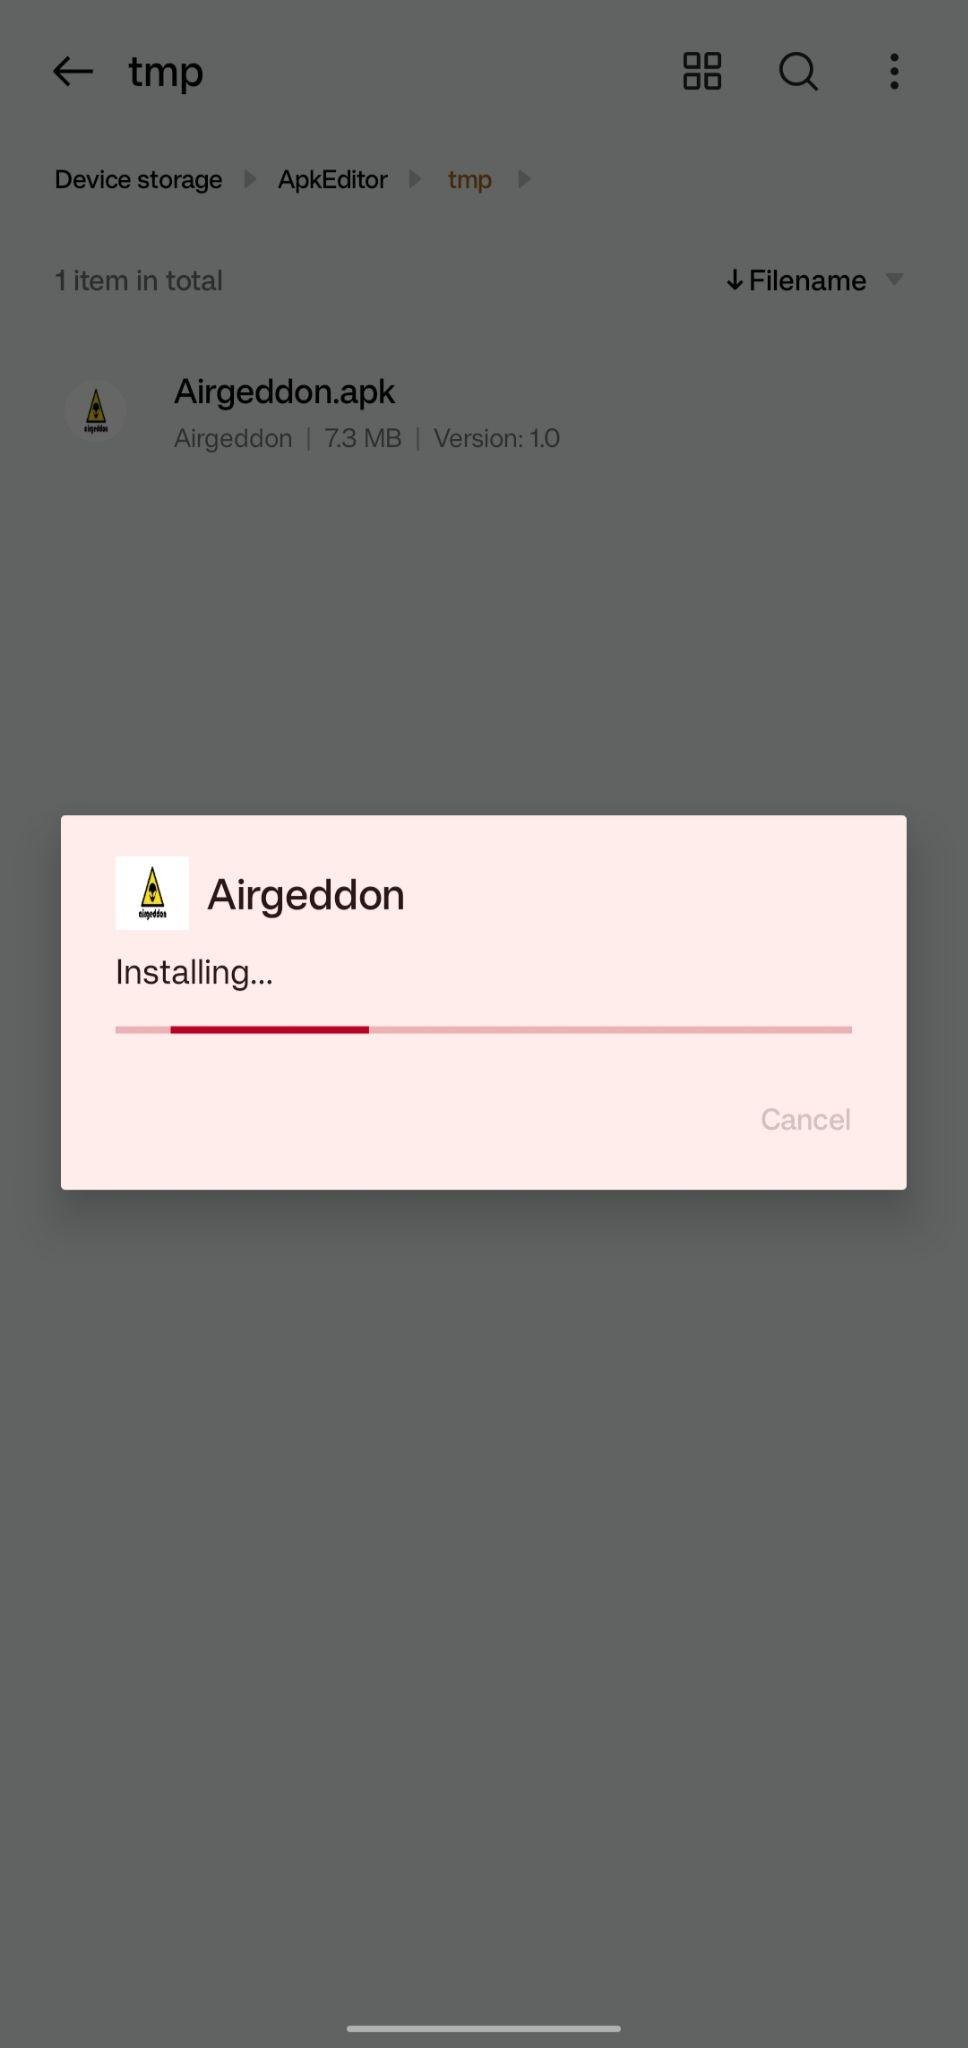 Airgeddon apk installing